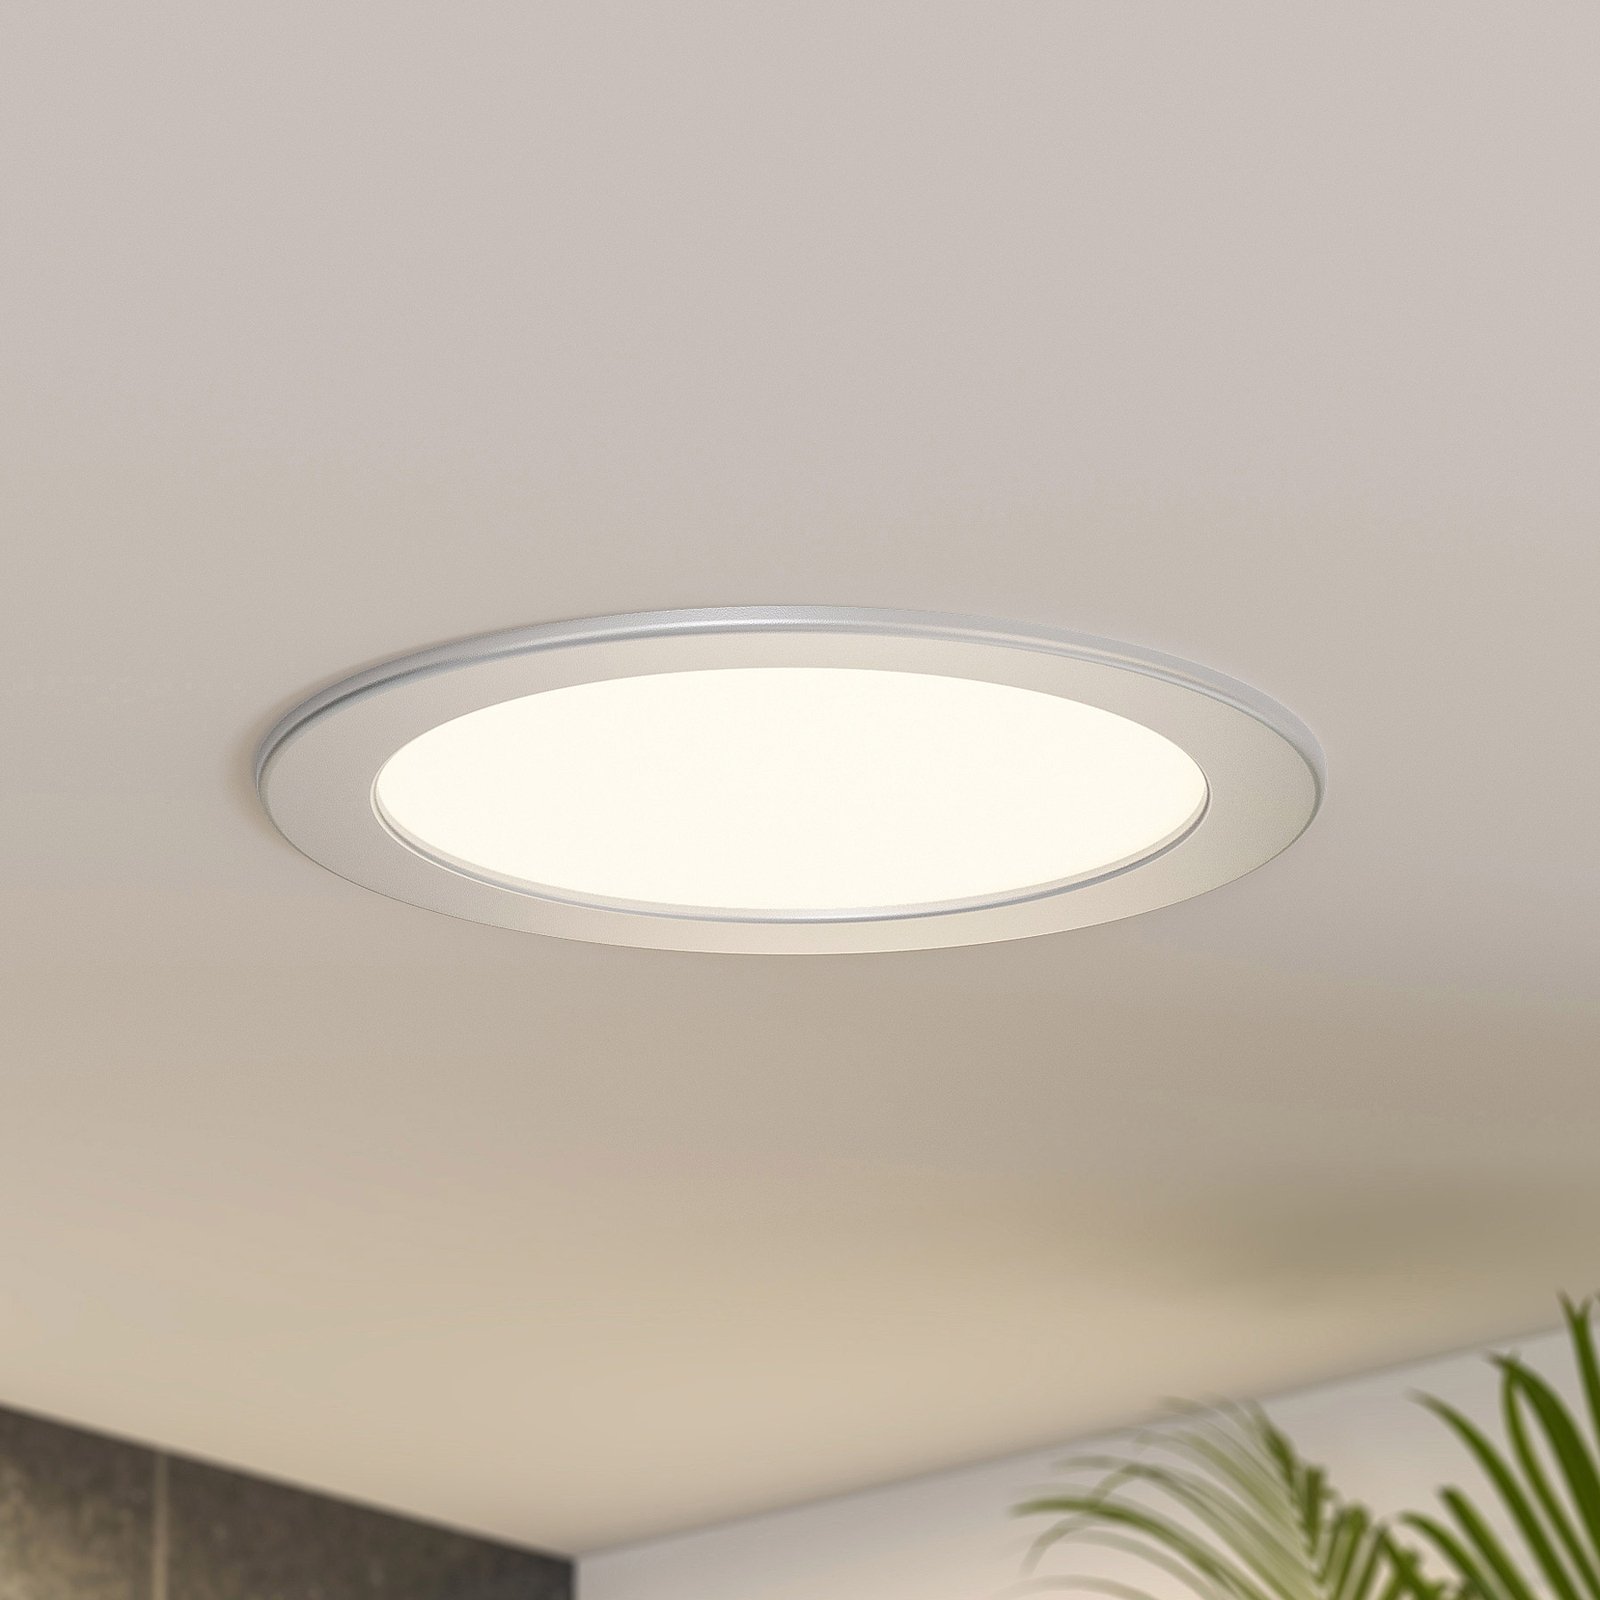 Prios Cadance LED recessed light, silver, 22 cm